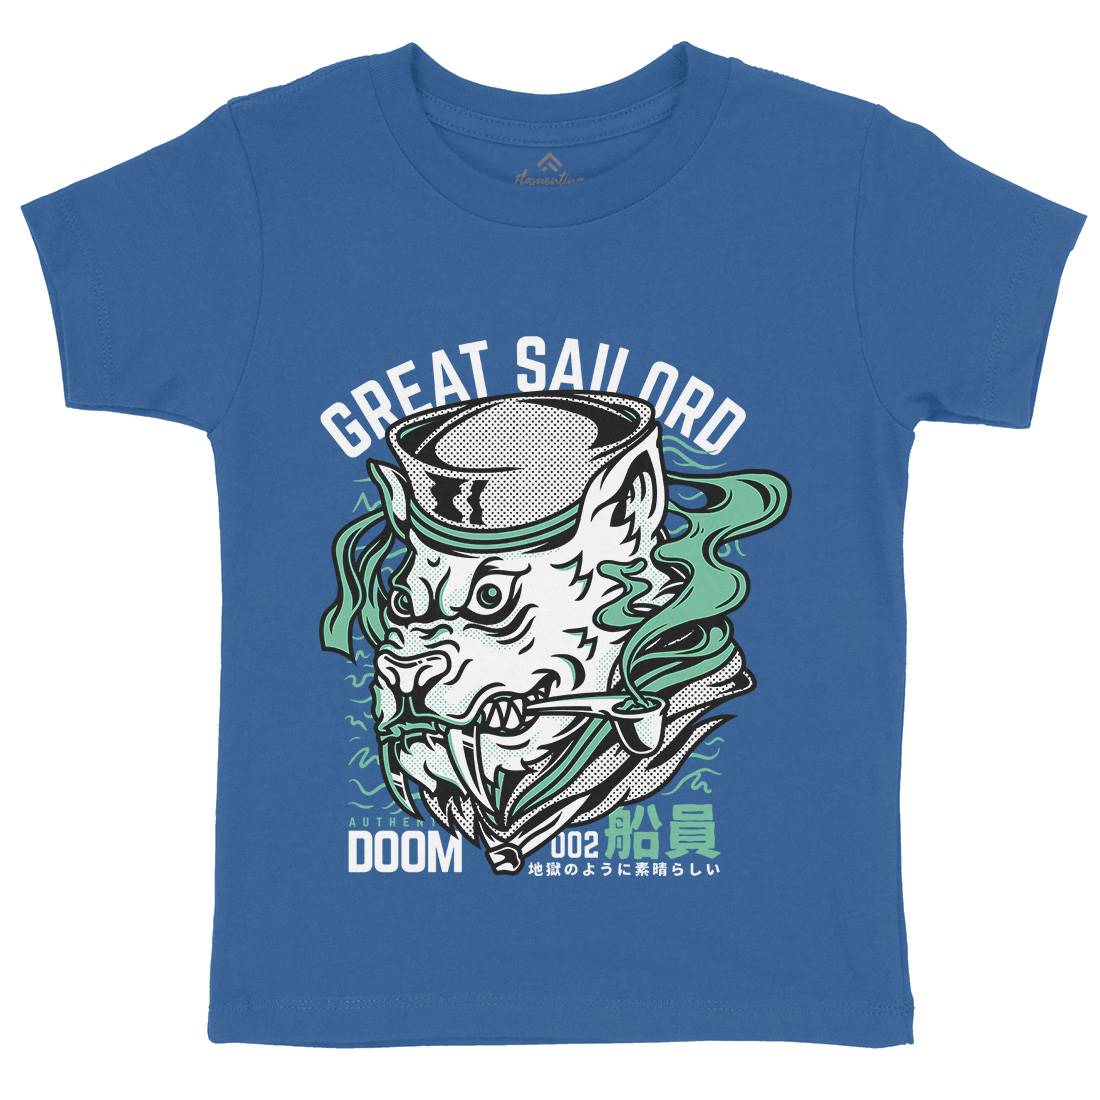 Great Sailord Kids Crew Neck T-Shirt Navy D601